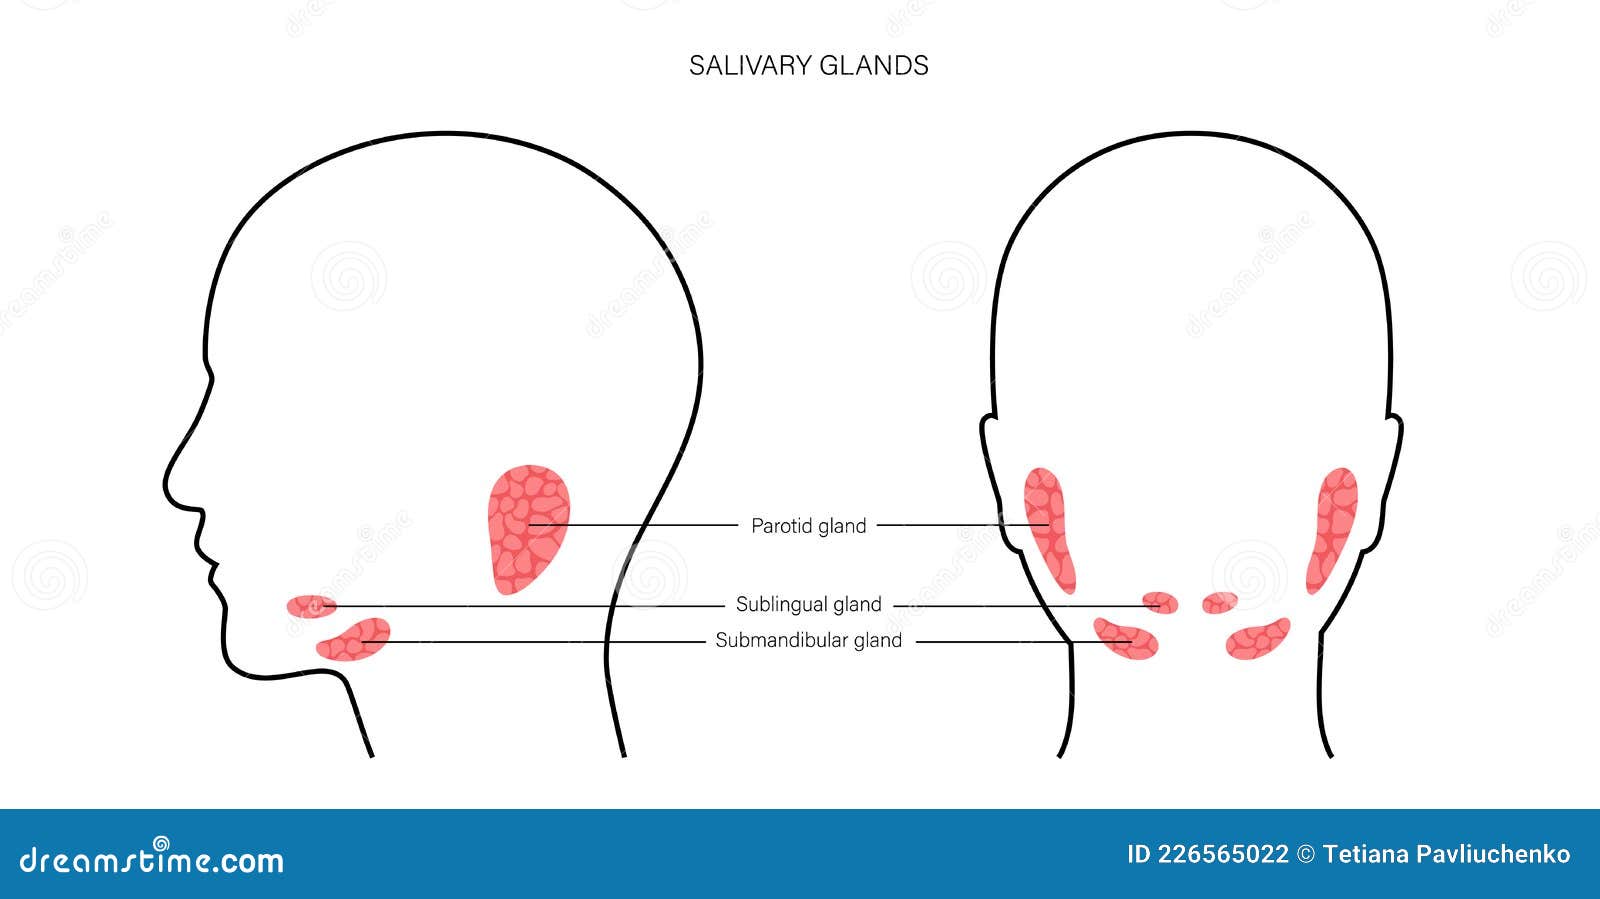 salivary gland concept